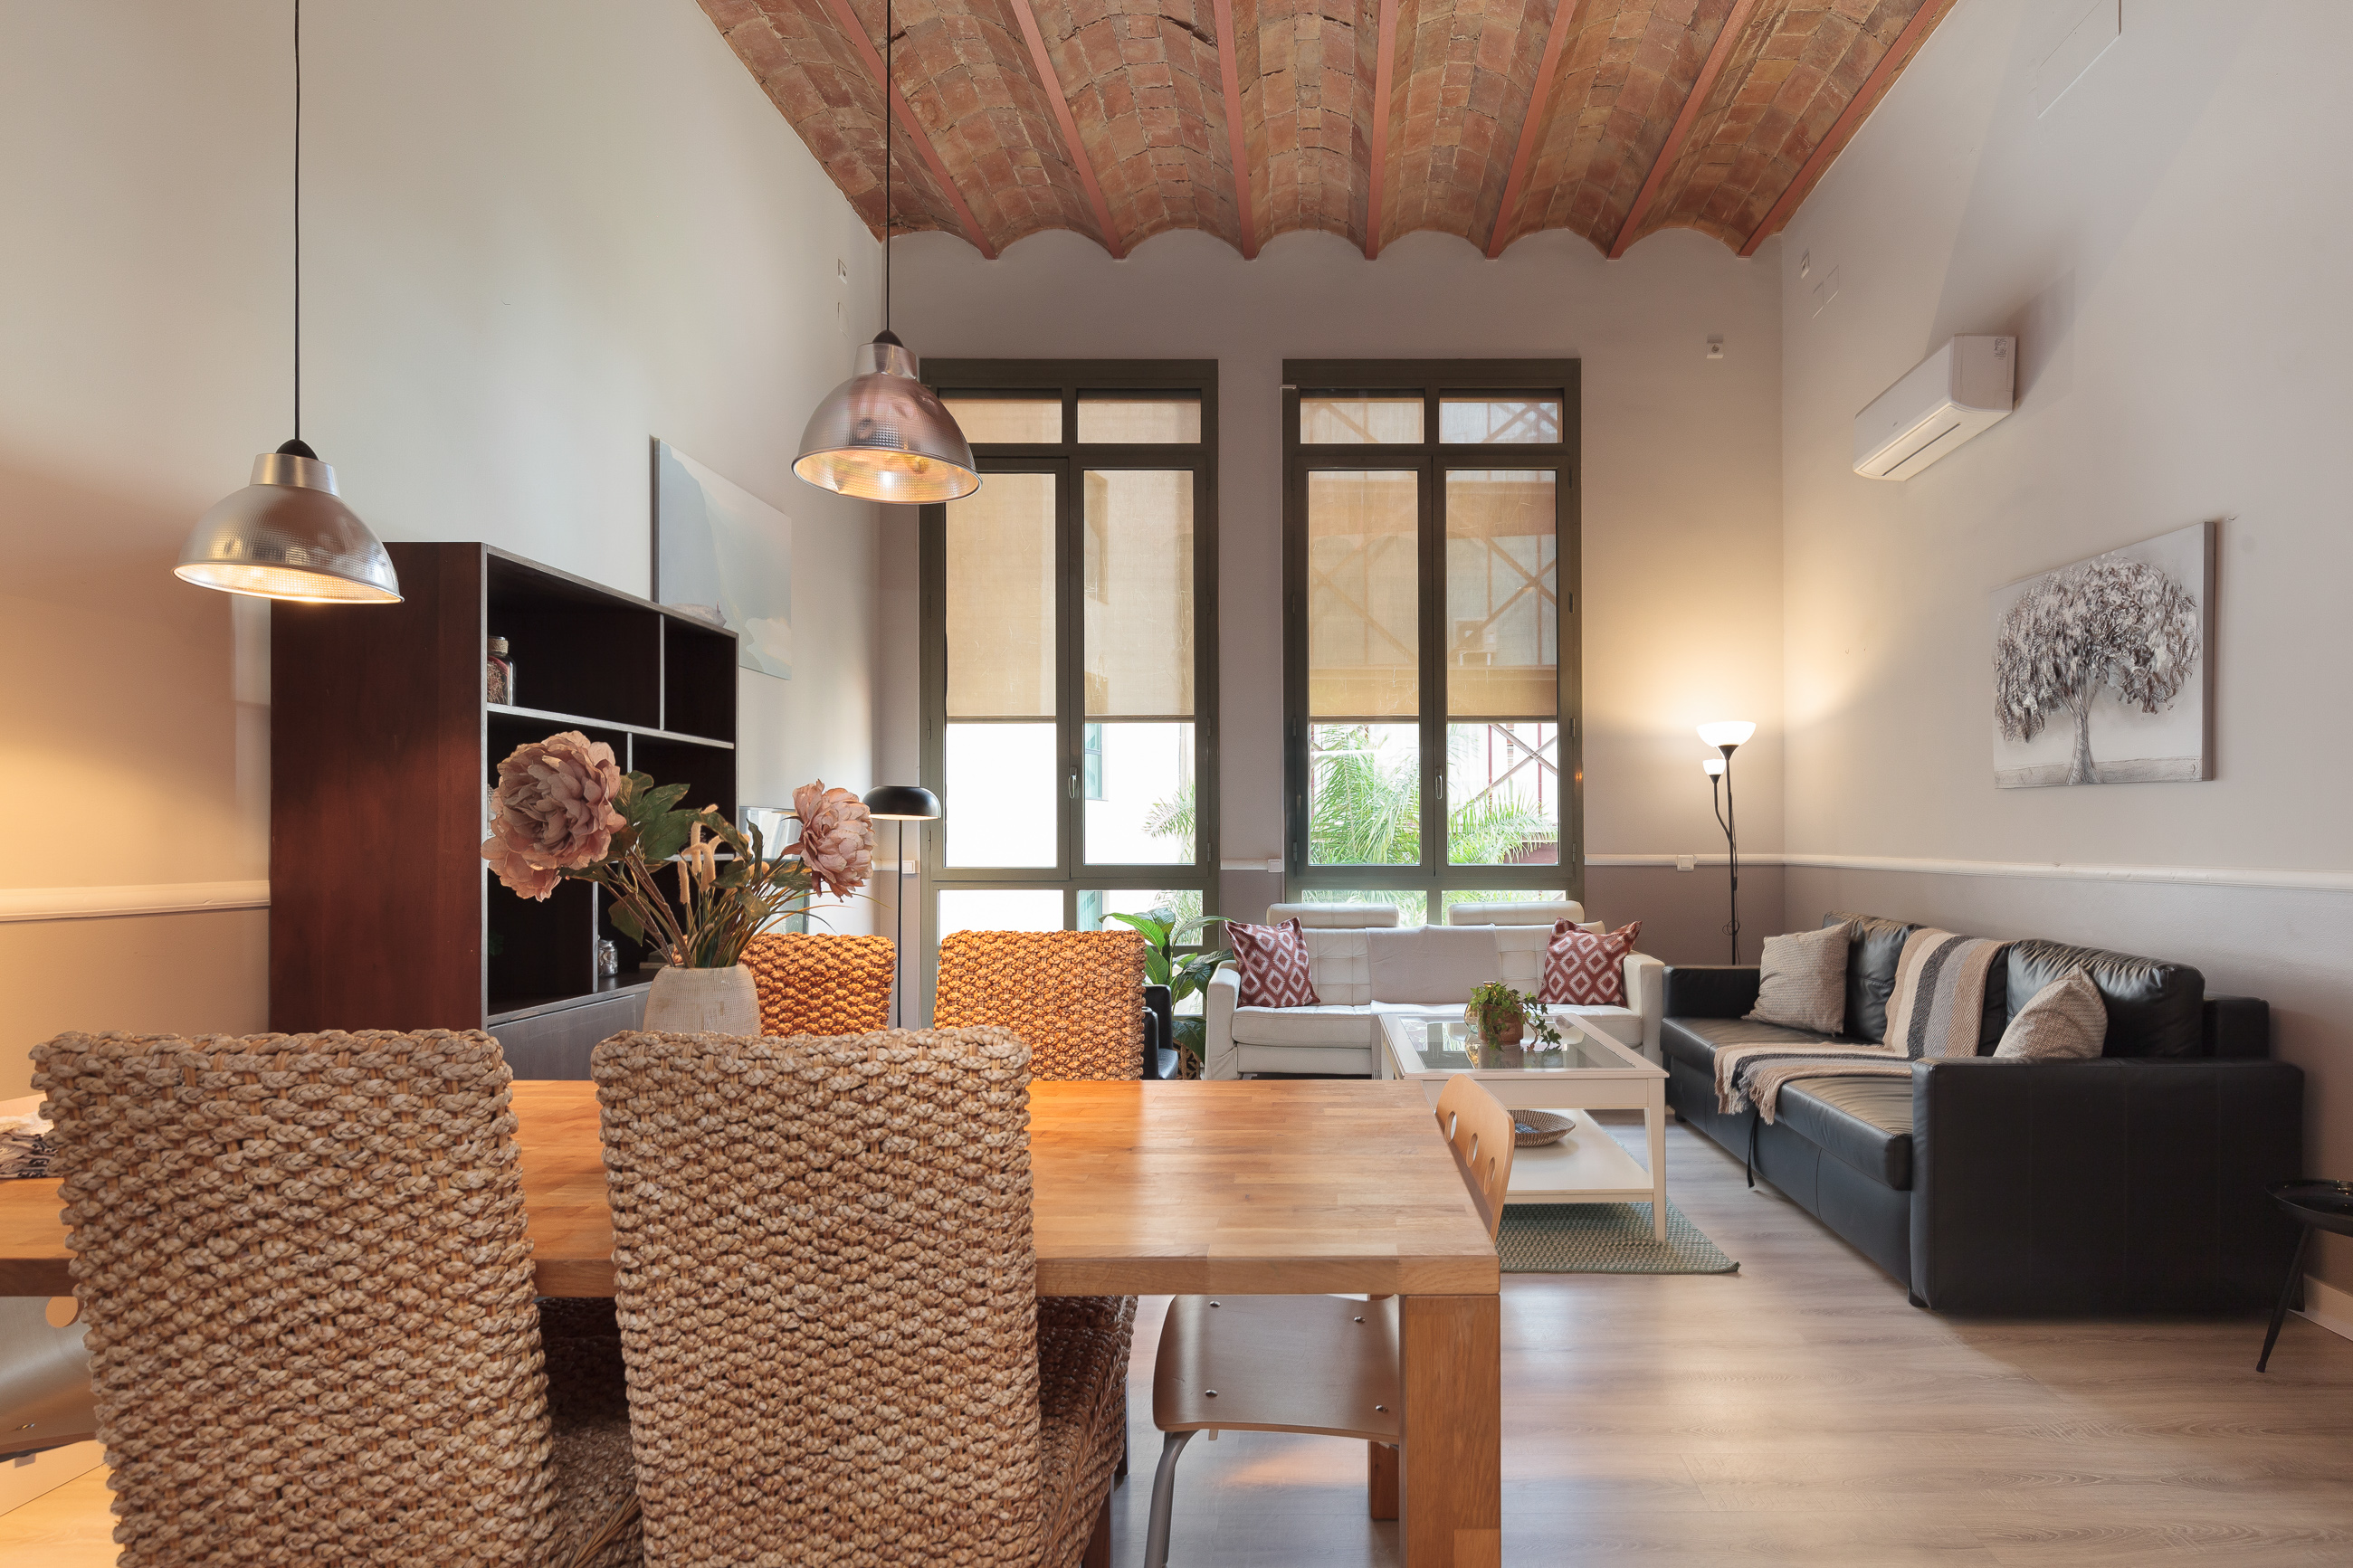 LetsgoBarcelona Paseo de Gracia Duplex - Apartments for Rent in Barcelona,  Catalonia, Spain - Airbnb